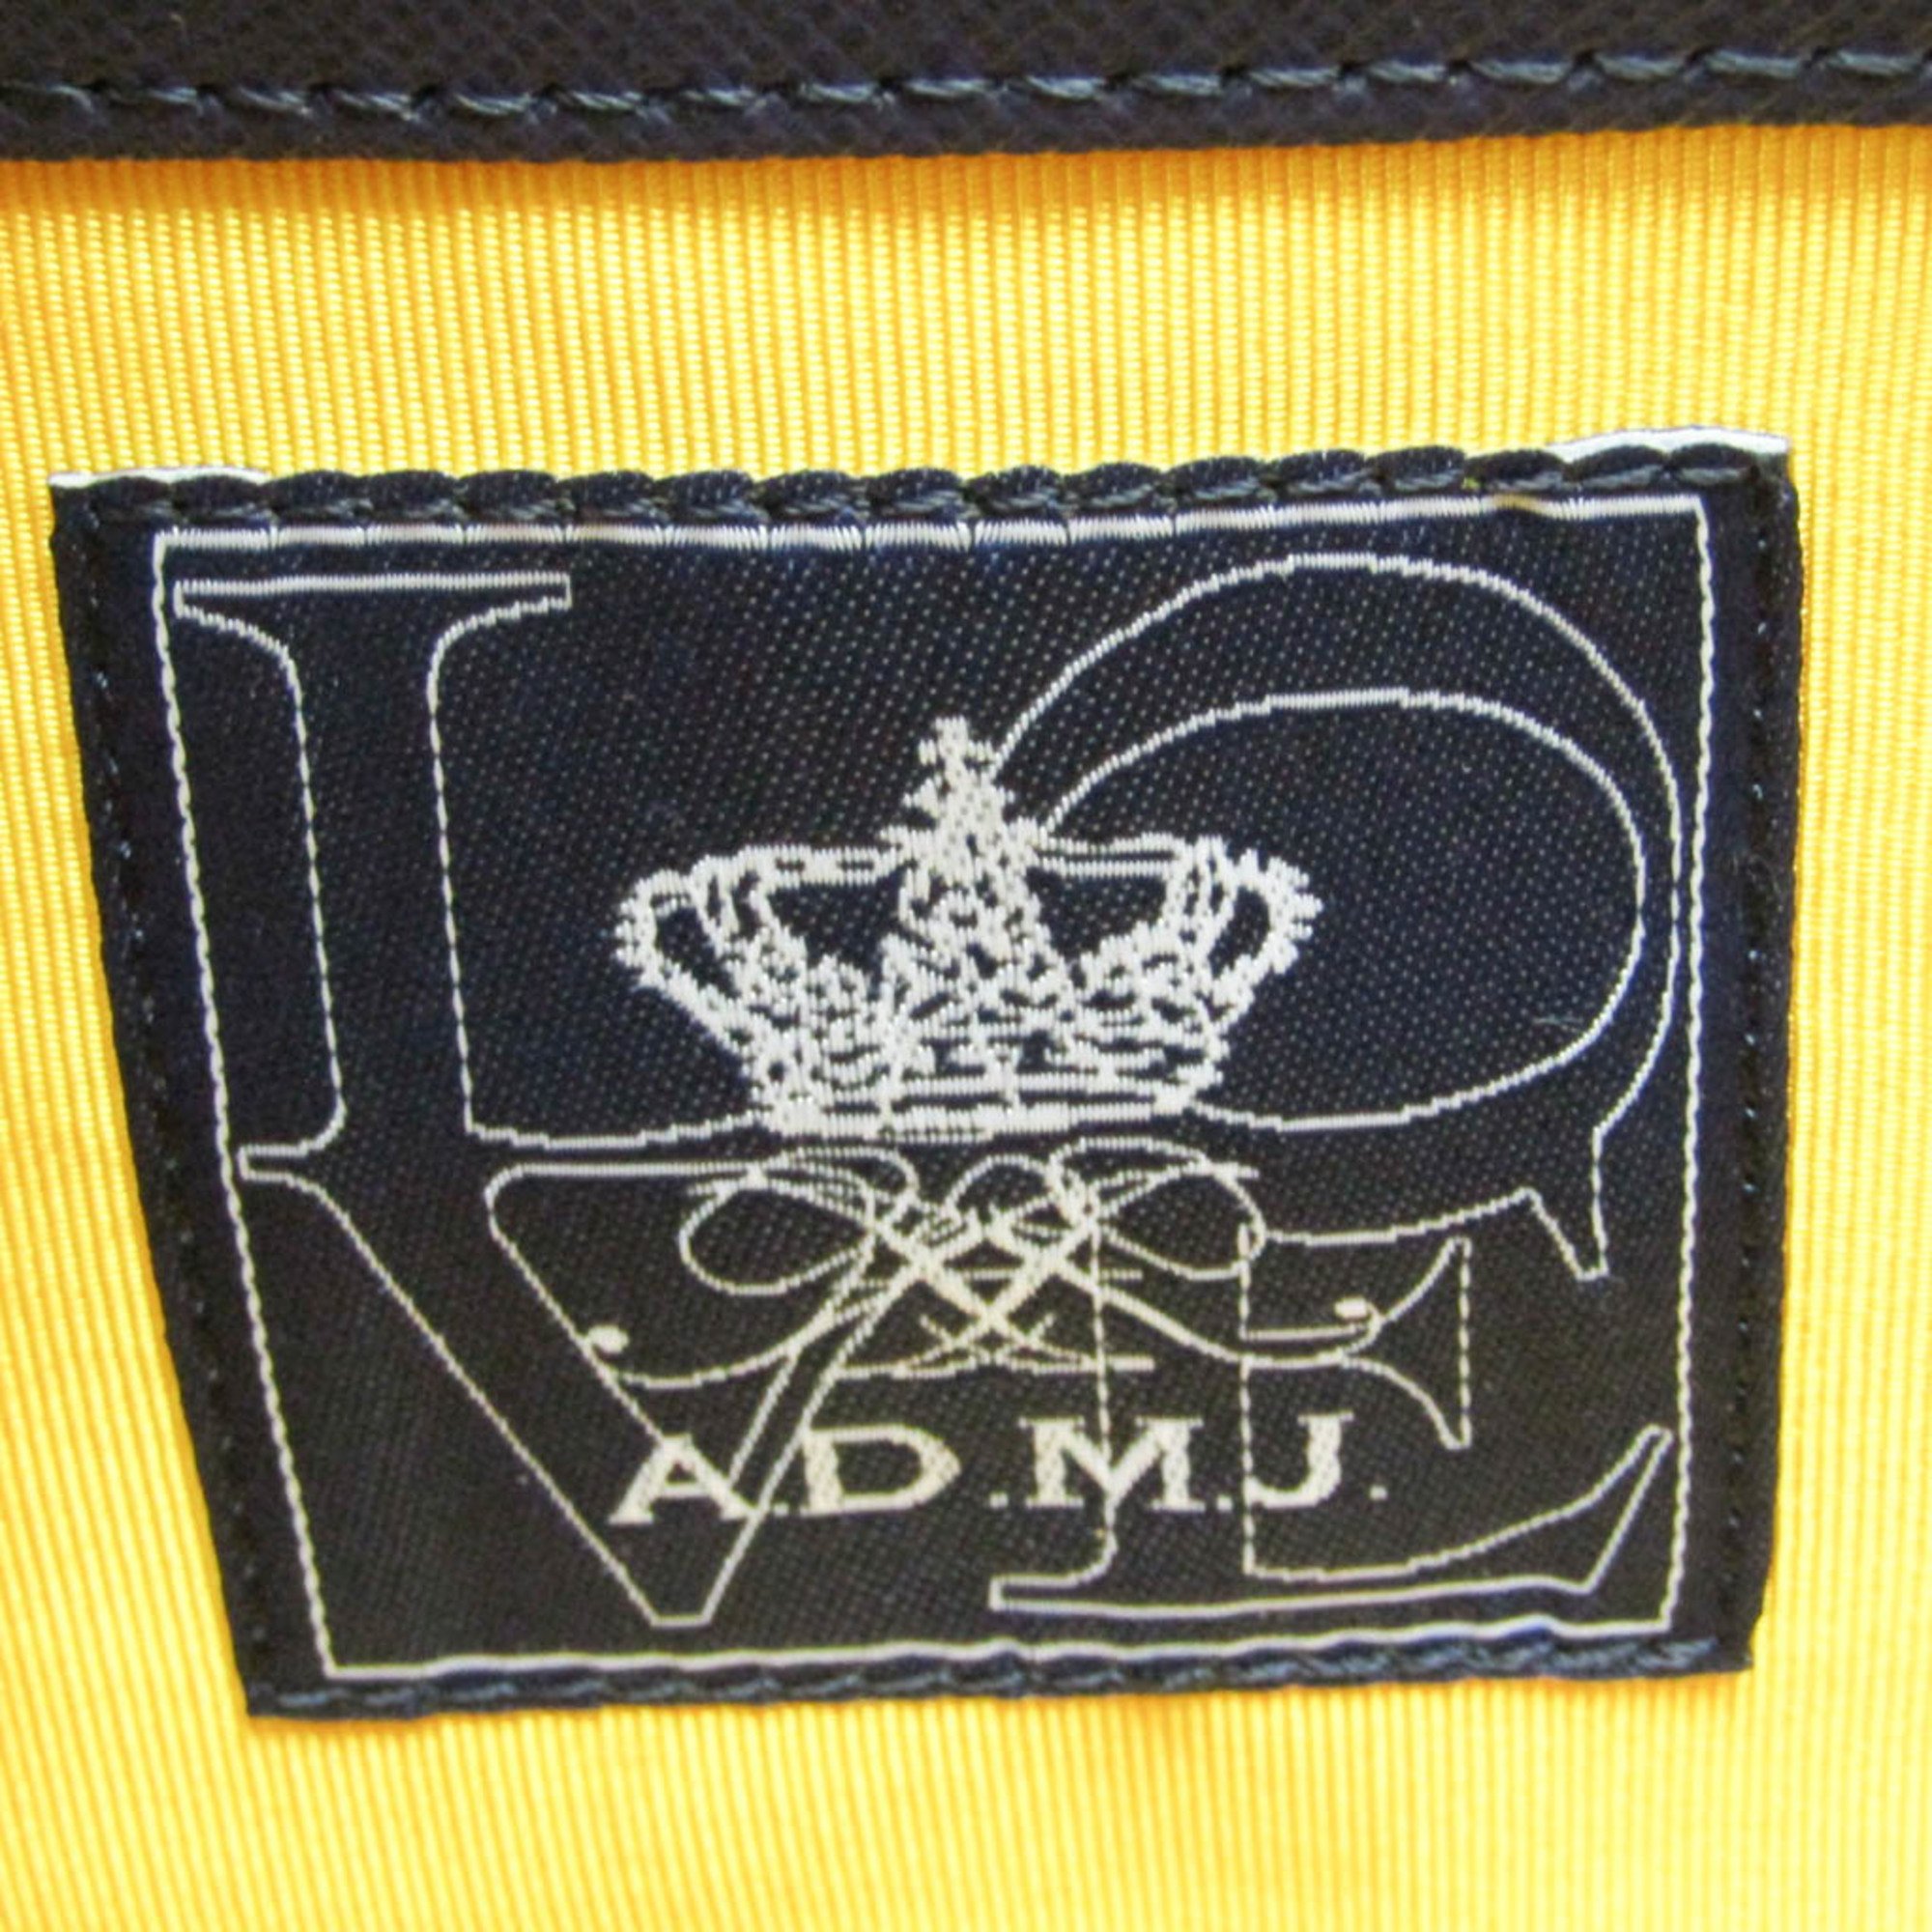 A.D.M.J Women's Leather Handbag Black